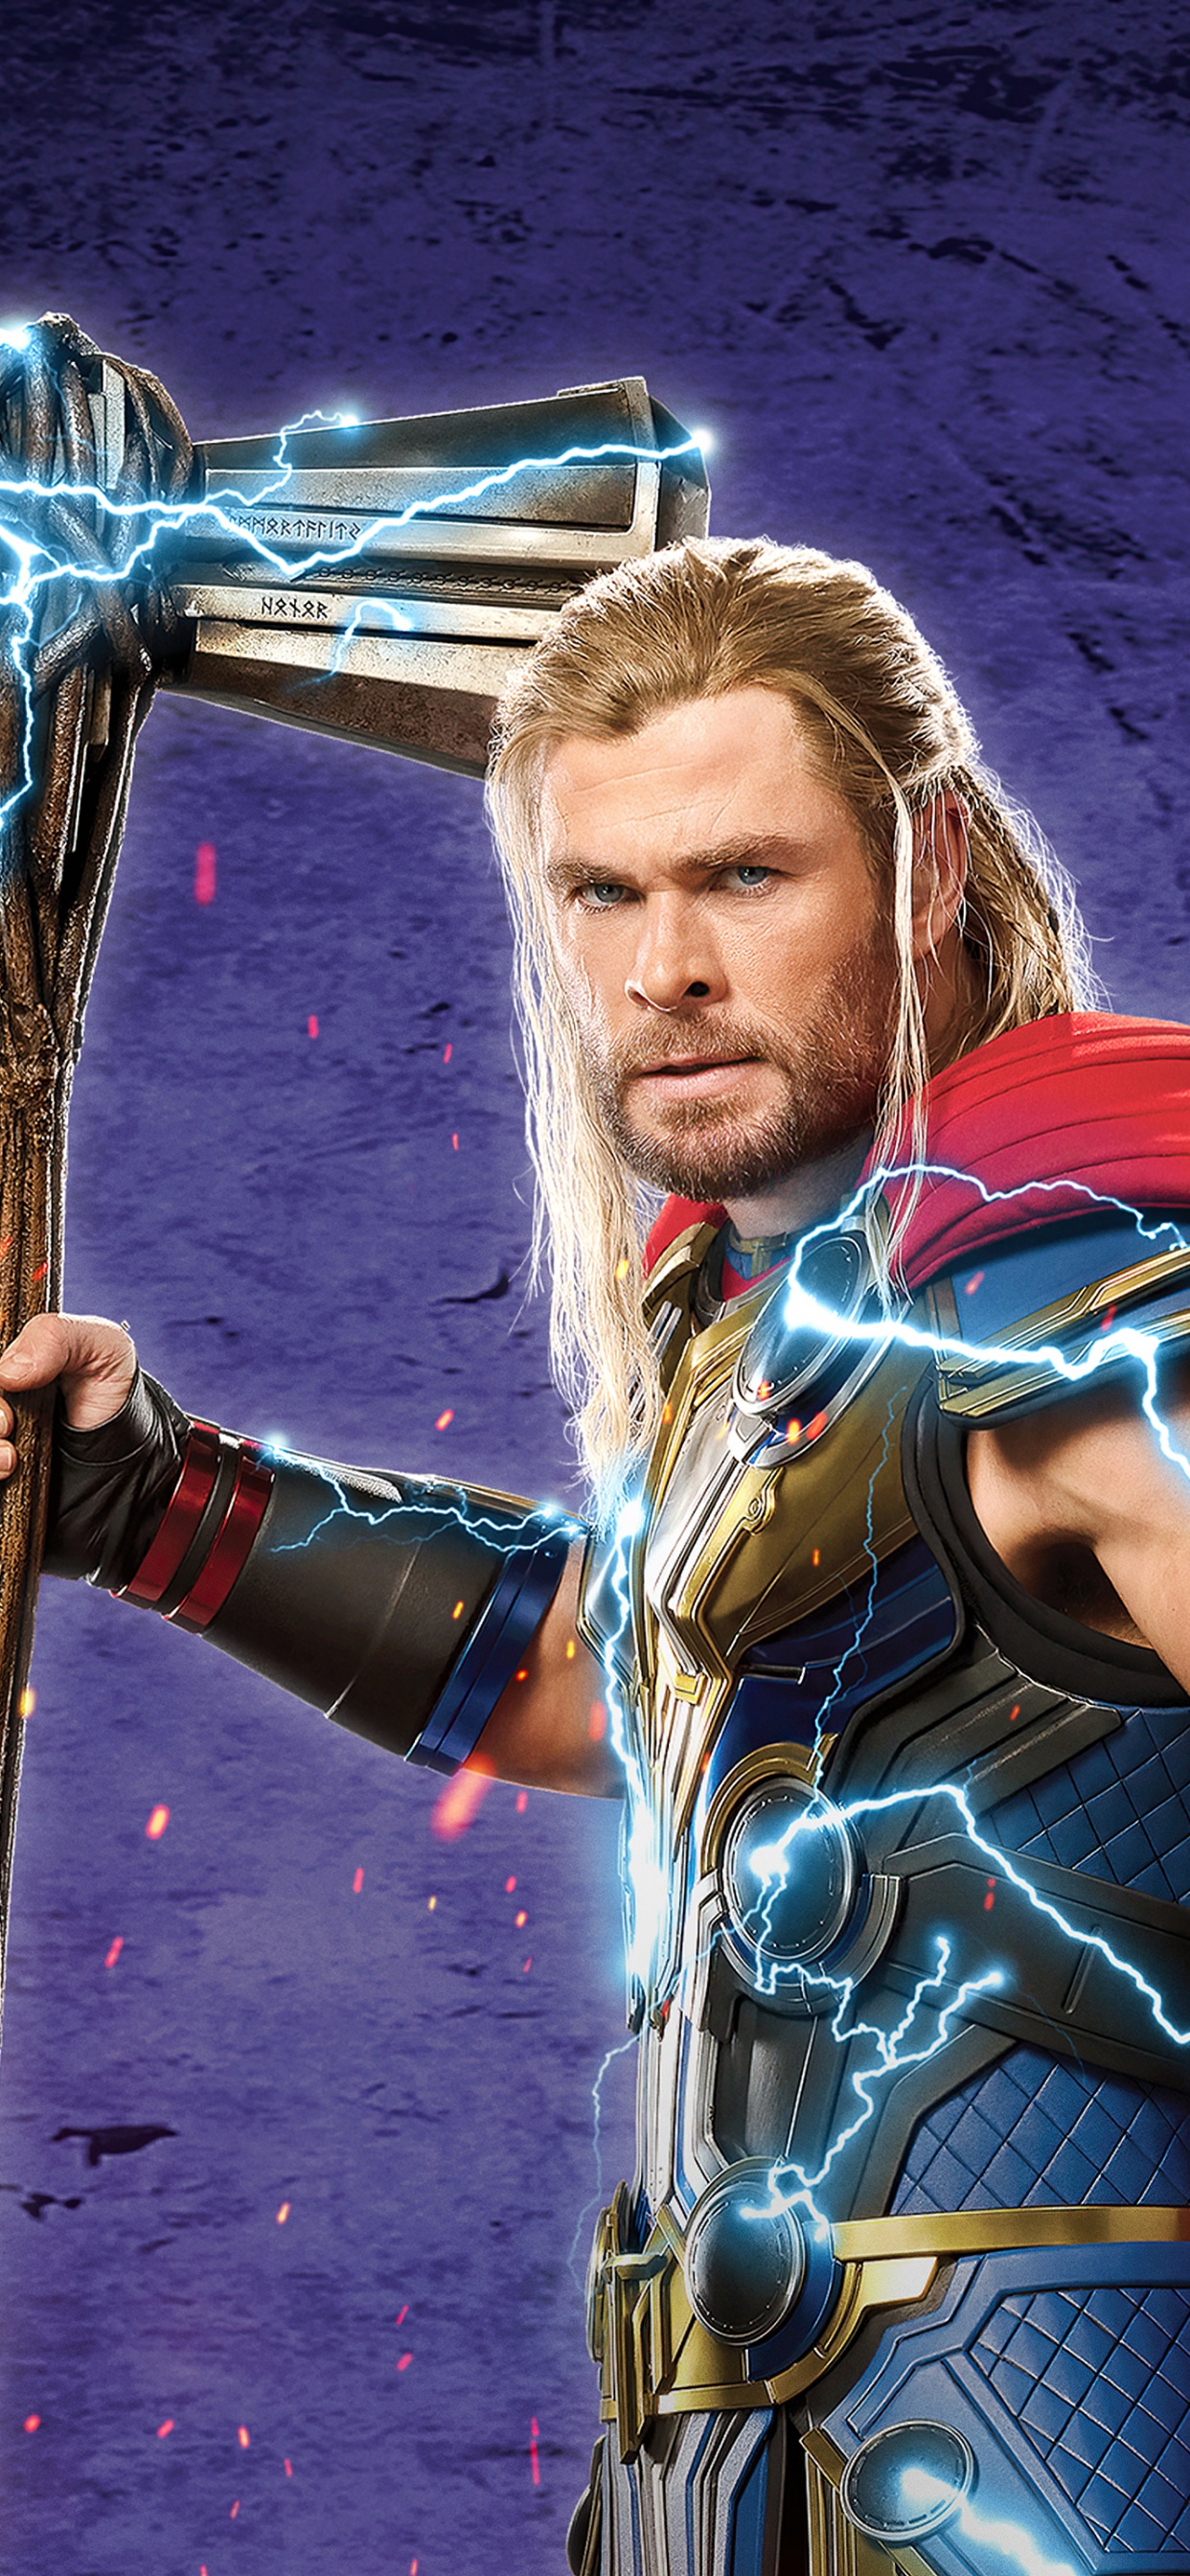 Chris Hemsworth In Thor Love And Thunder 4K Ultra HD Mobile Wallpaper